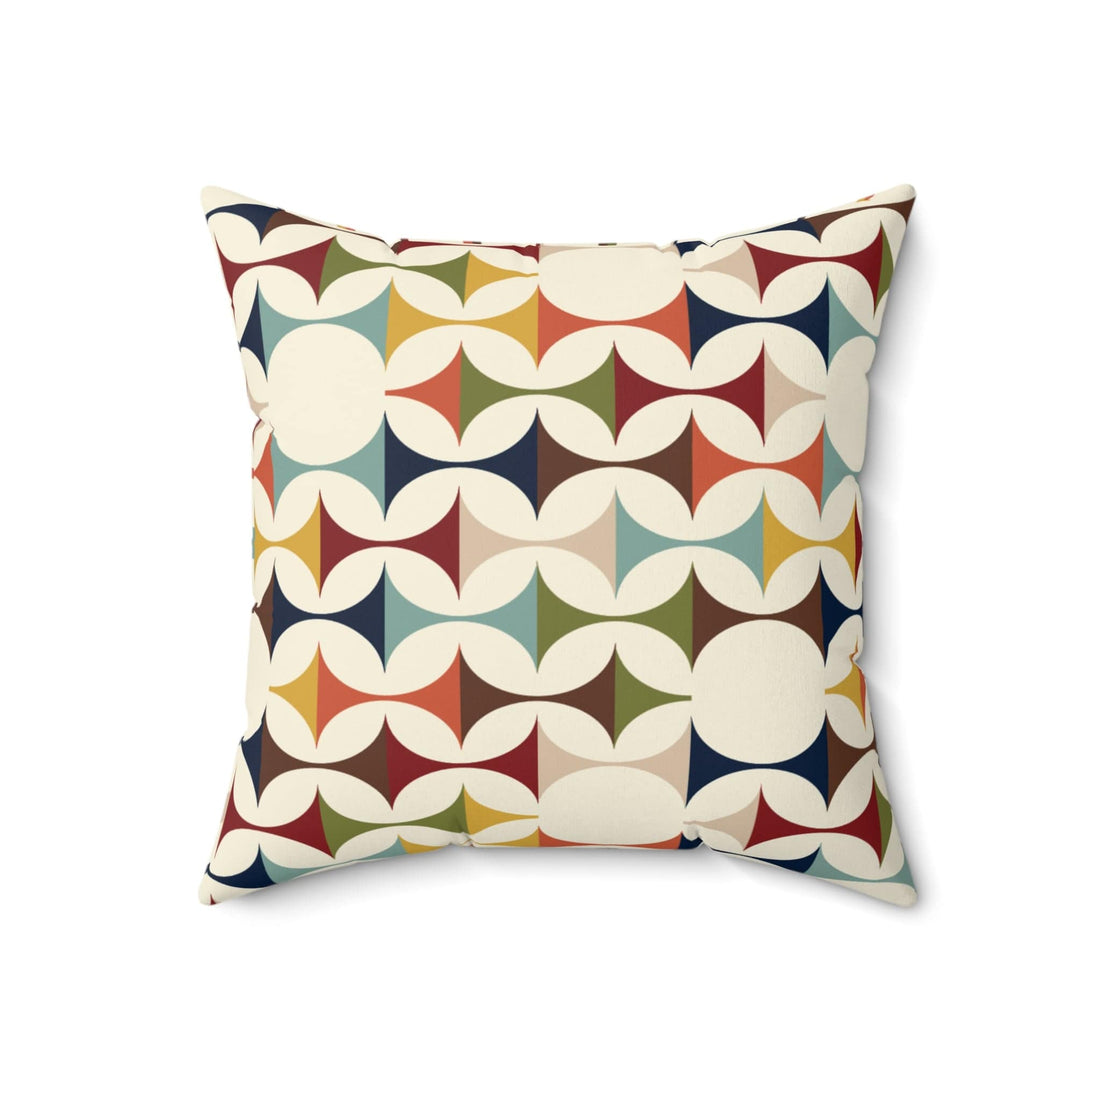 Kate McEnroe New York Mid Century Modern Geometric Throw Pillow with Insert, Retro 60s Modernist Color Block CushionsThrow Pillows87746696736101585152